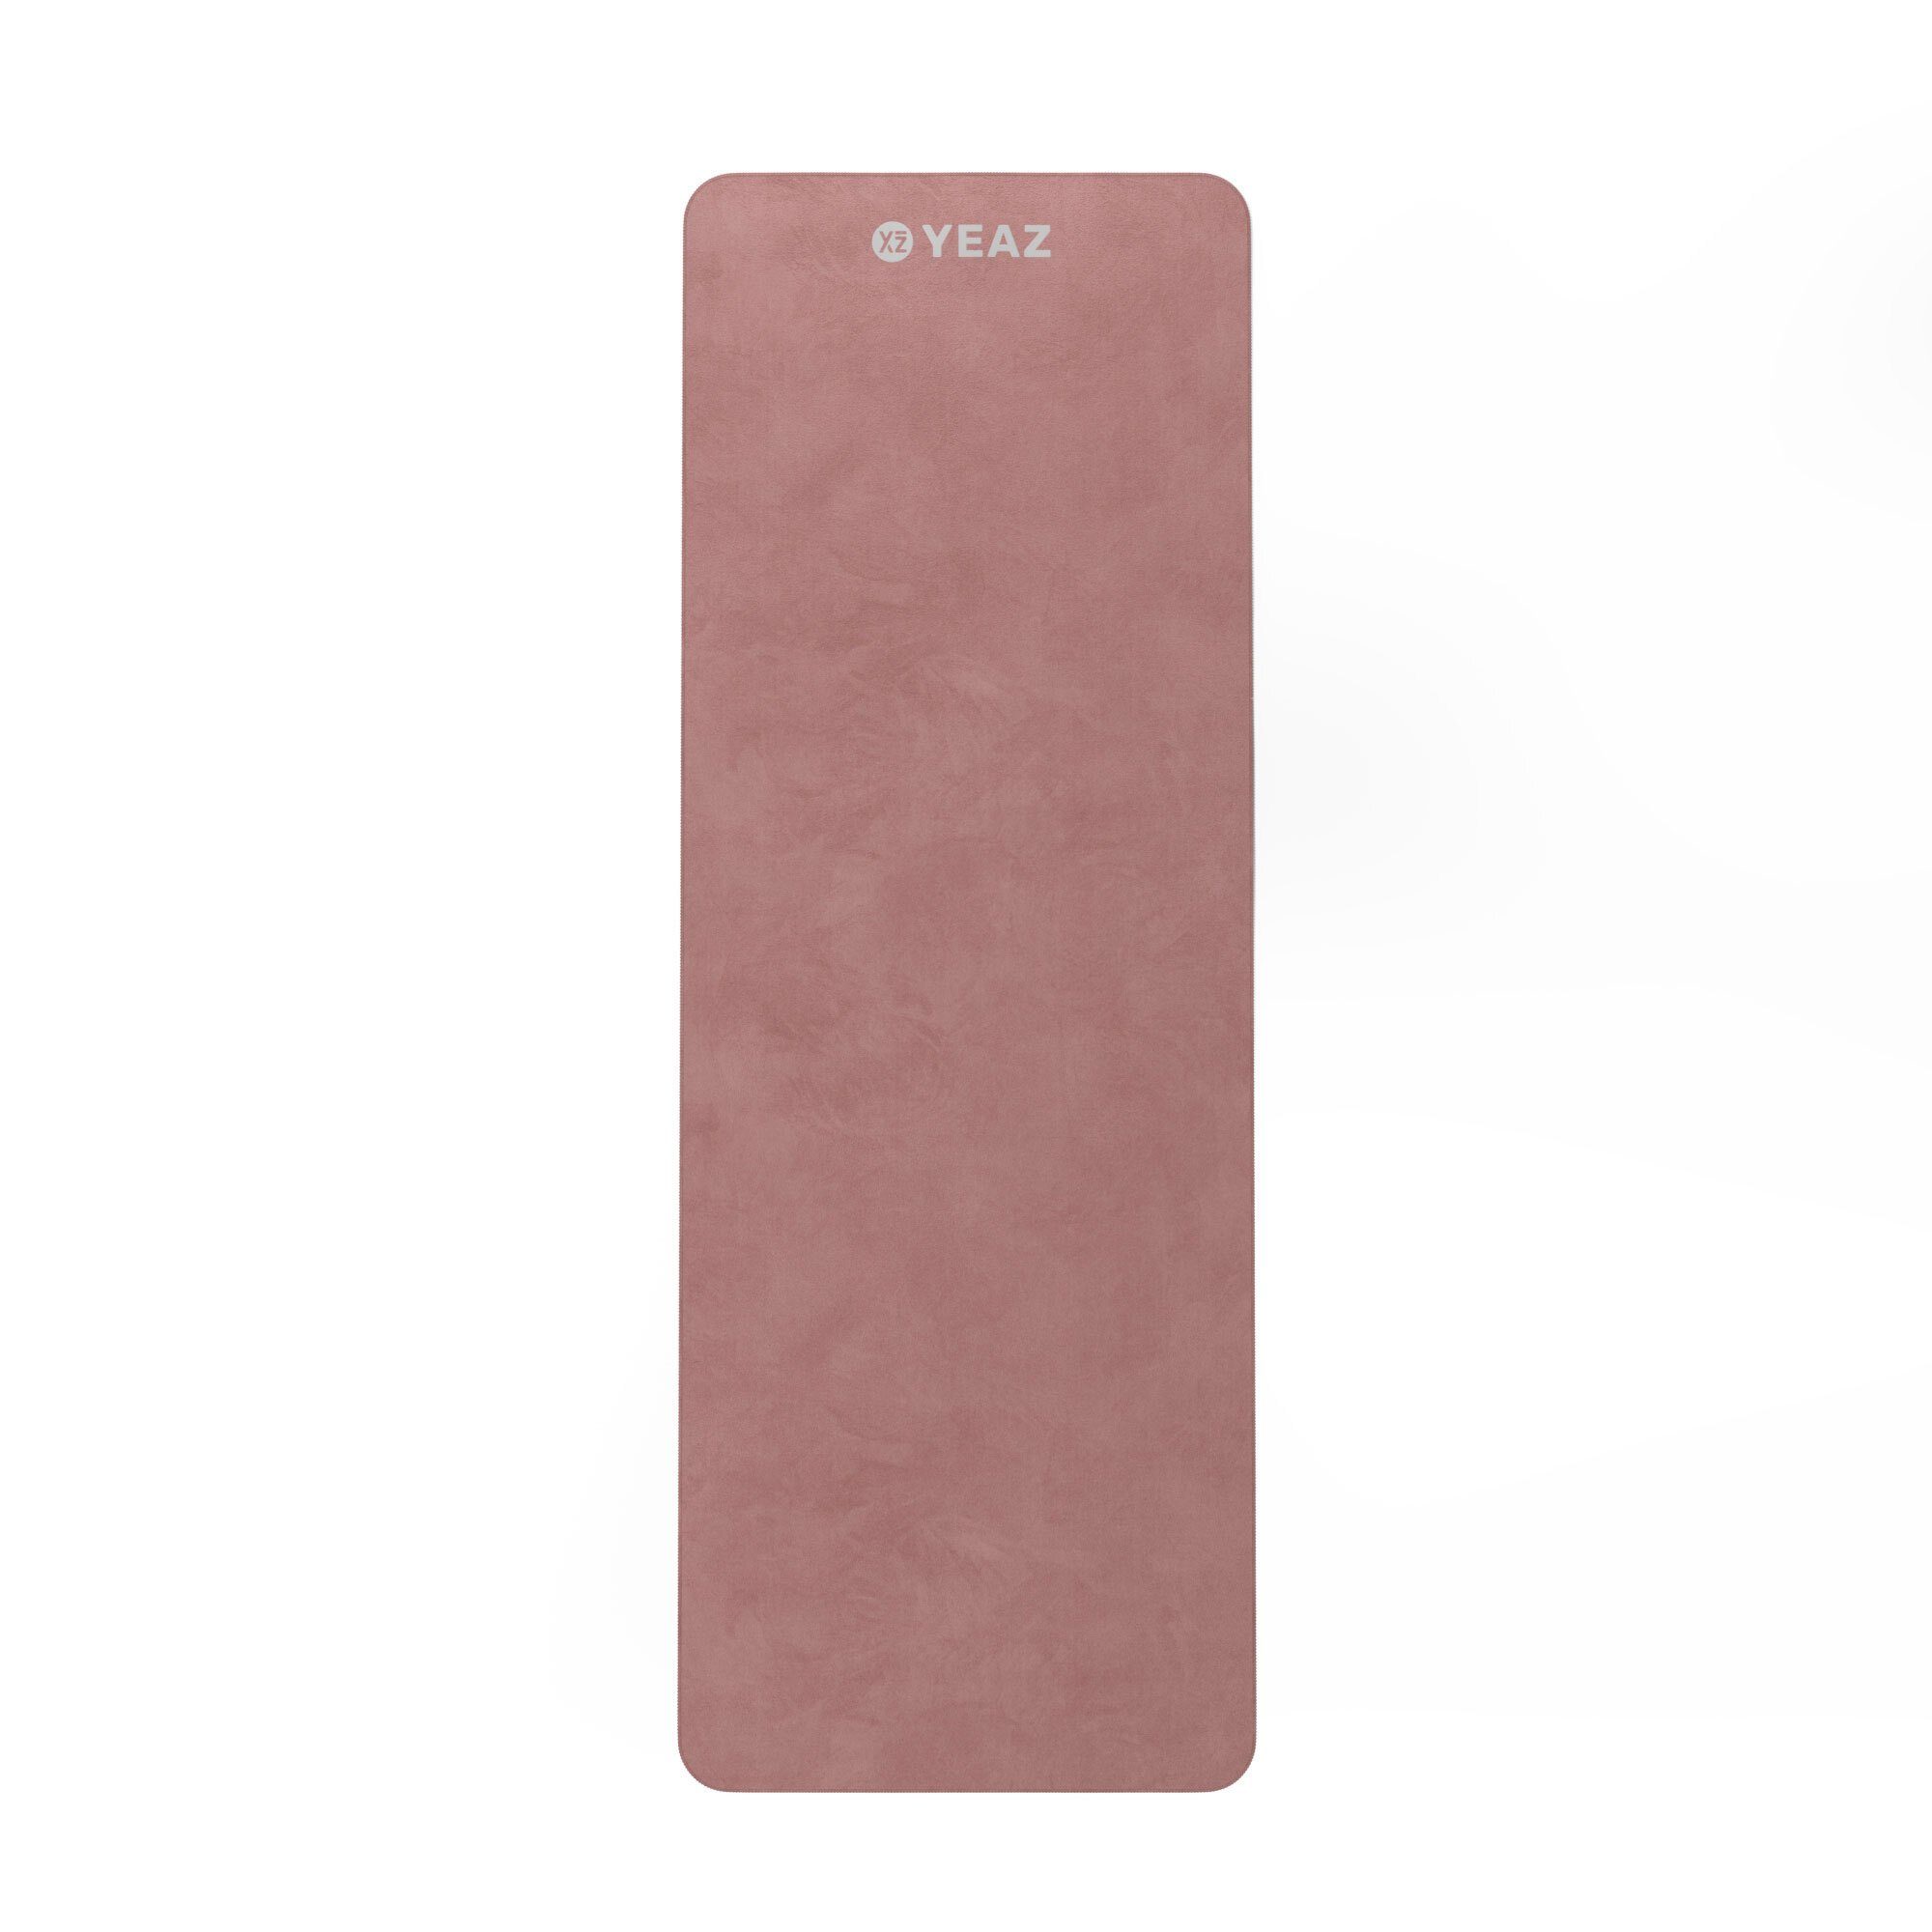 set & Soft-Touch NEXT Oberfläche rutschfeste Yogablock yoga-blöcke handtuch, LEVEL YEAZ - pink